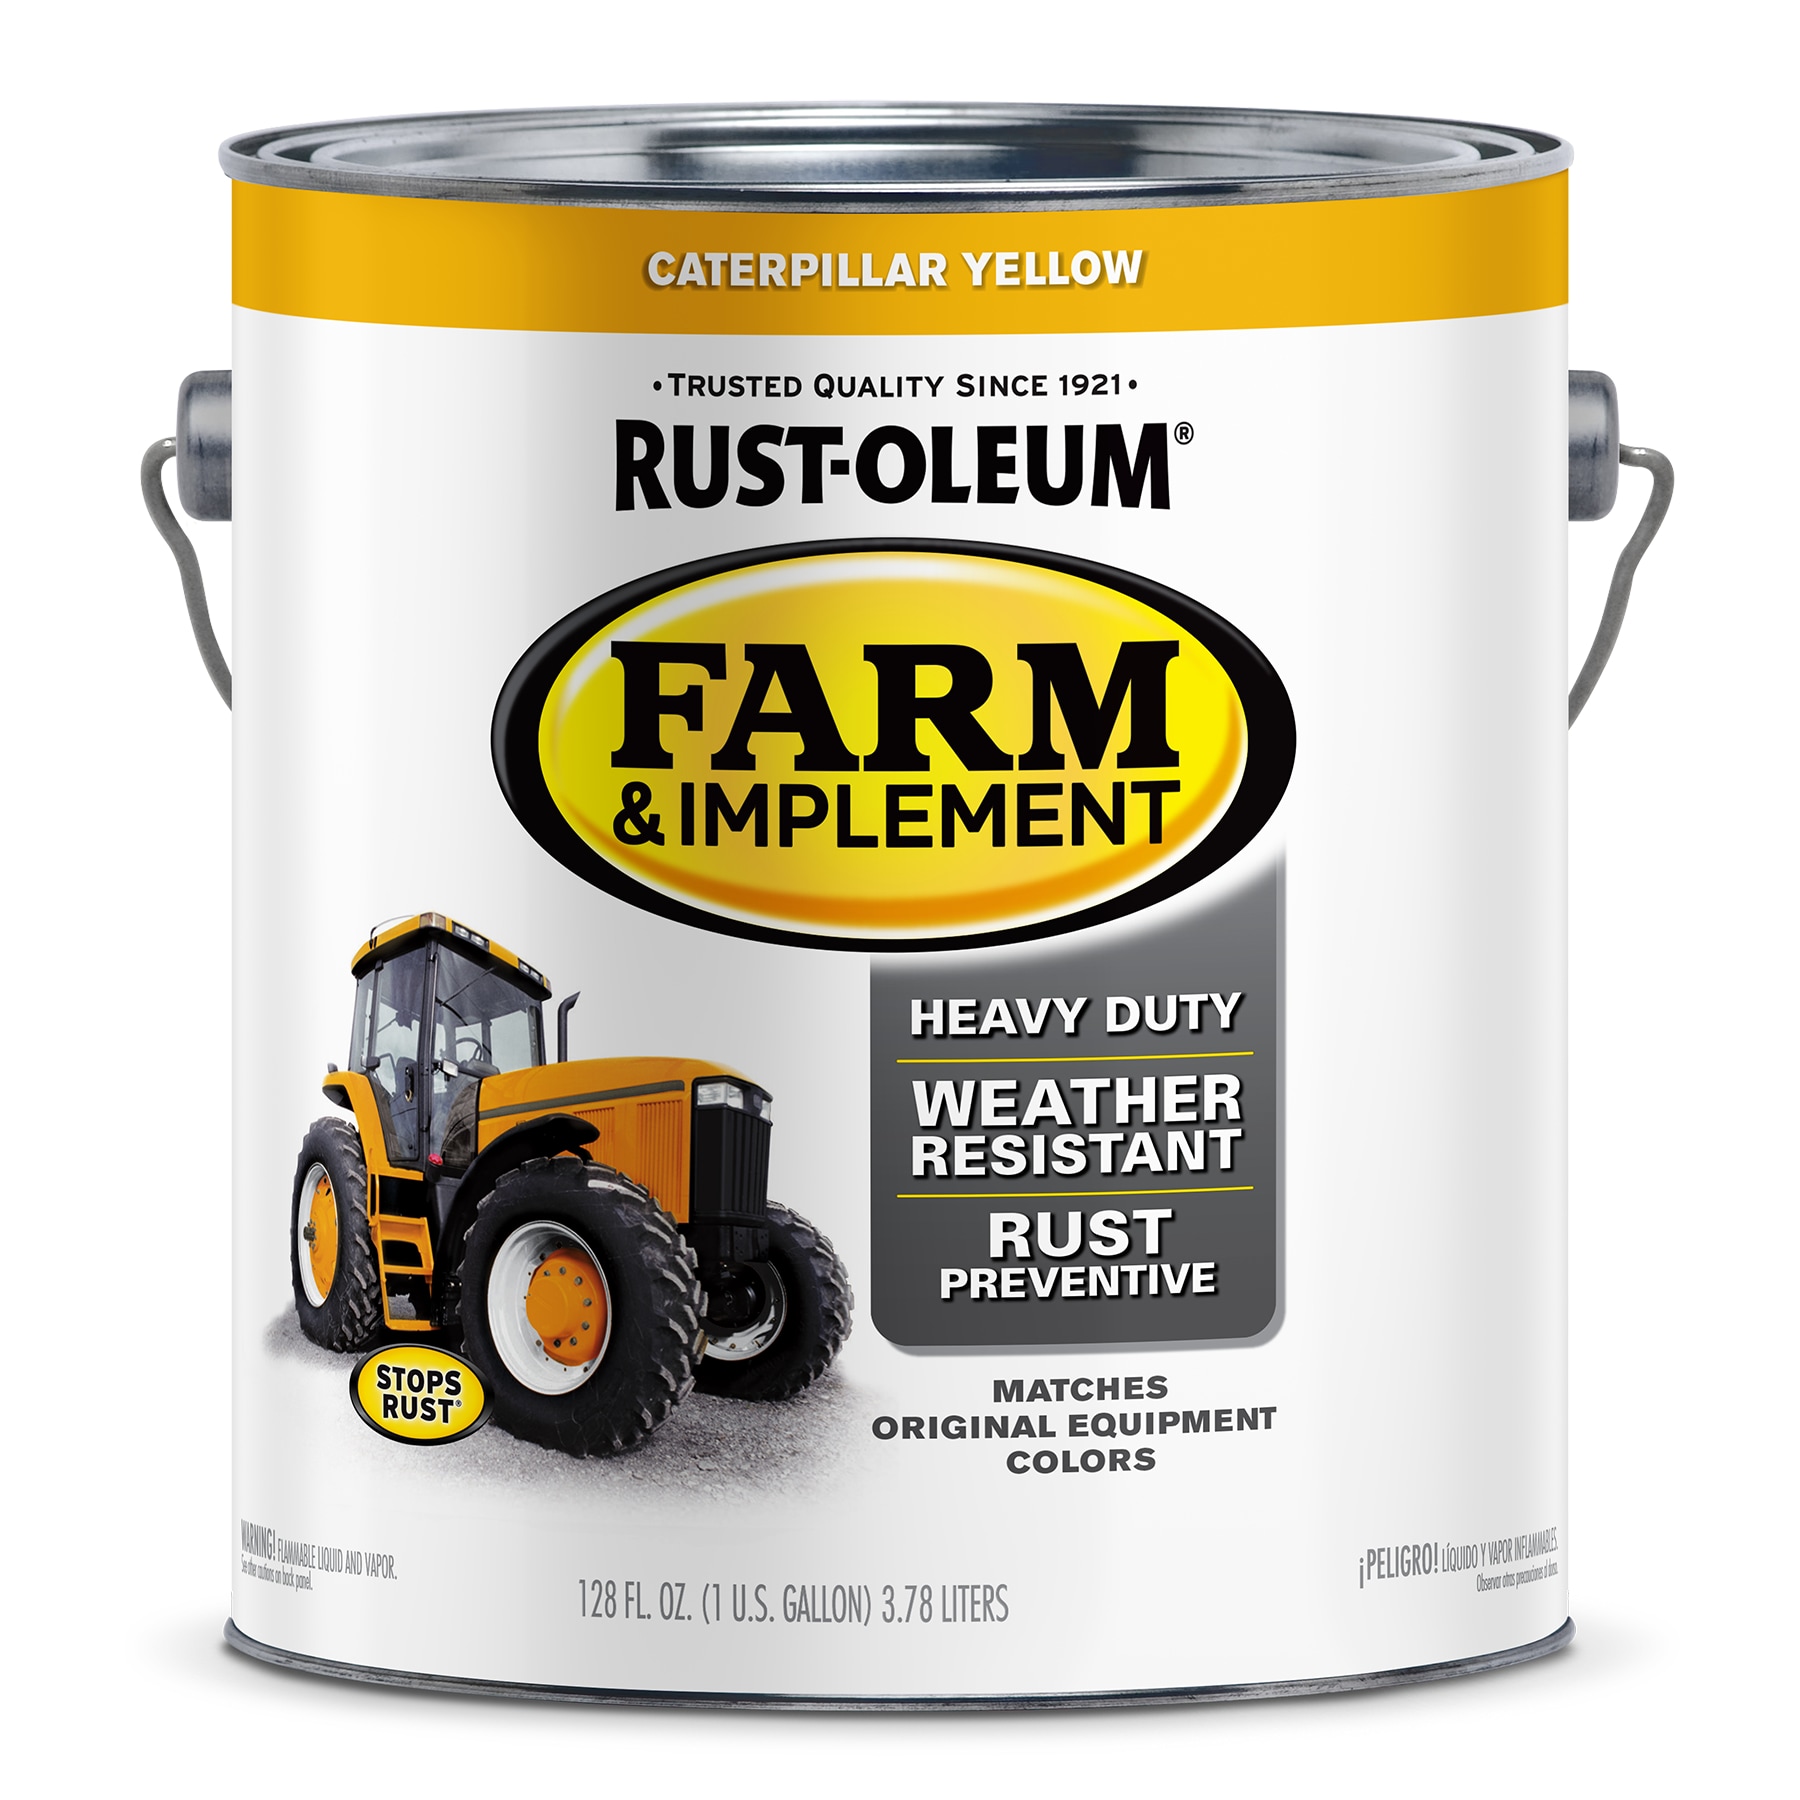 Rust-Oleum Professional Gloss White Interior/Exterior Oil-based Industrial Enamel  Paint (1-Gallon) in the Industrial Enamel Paint department at